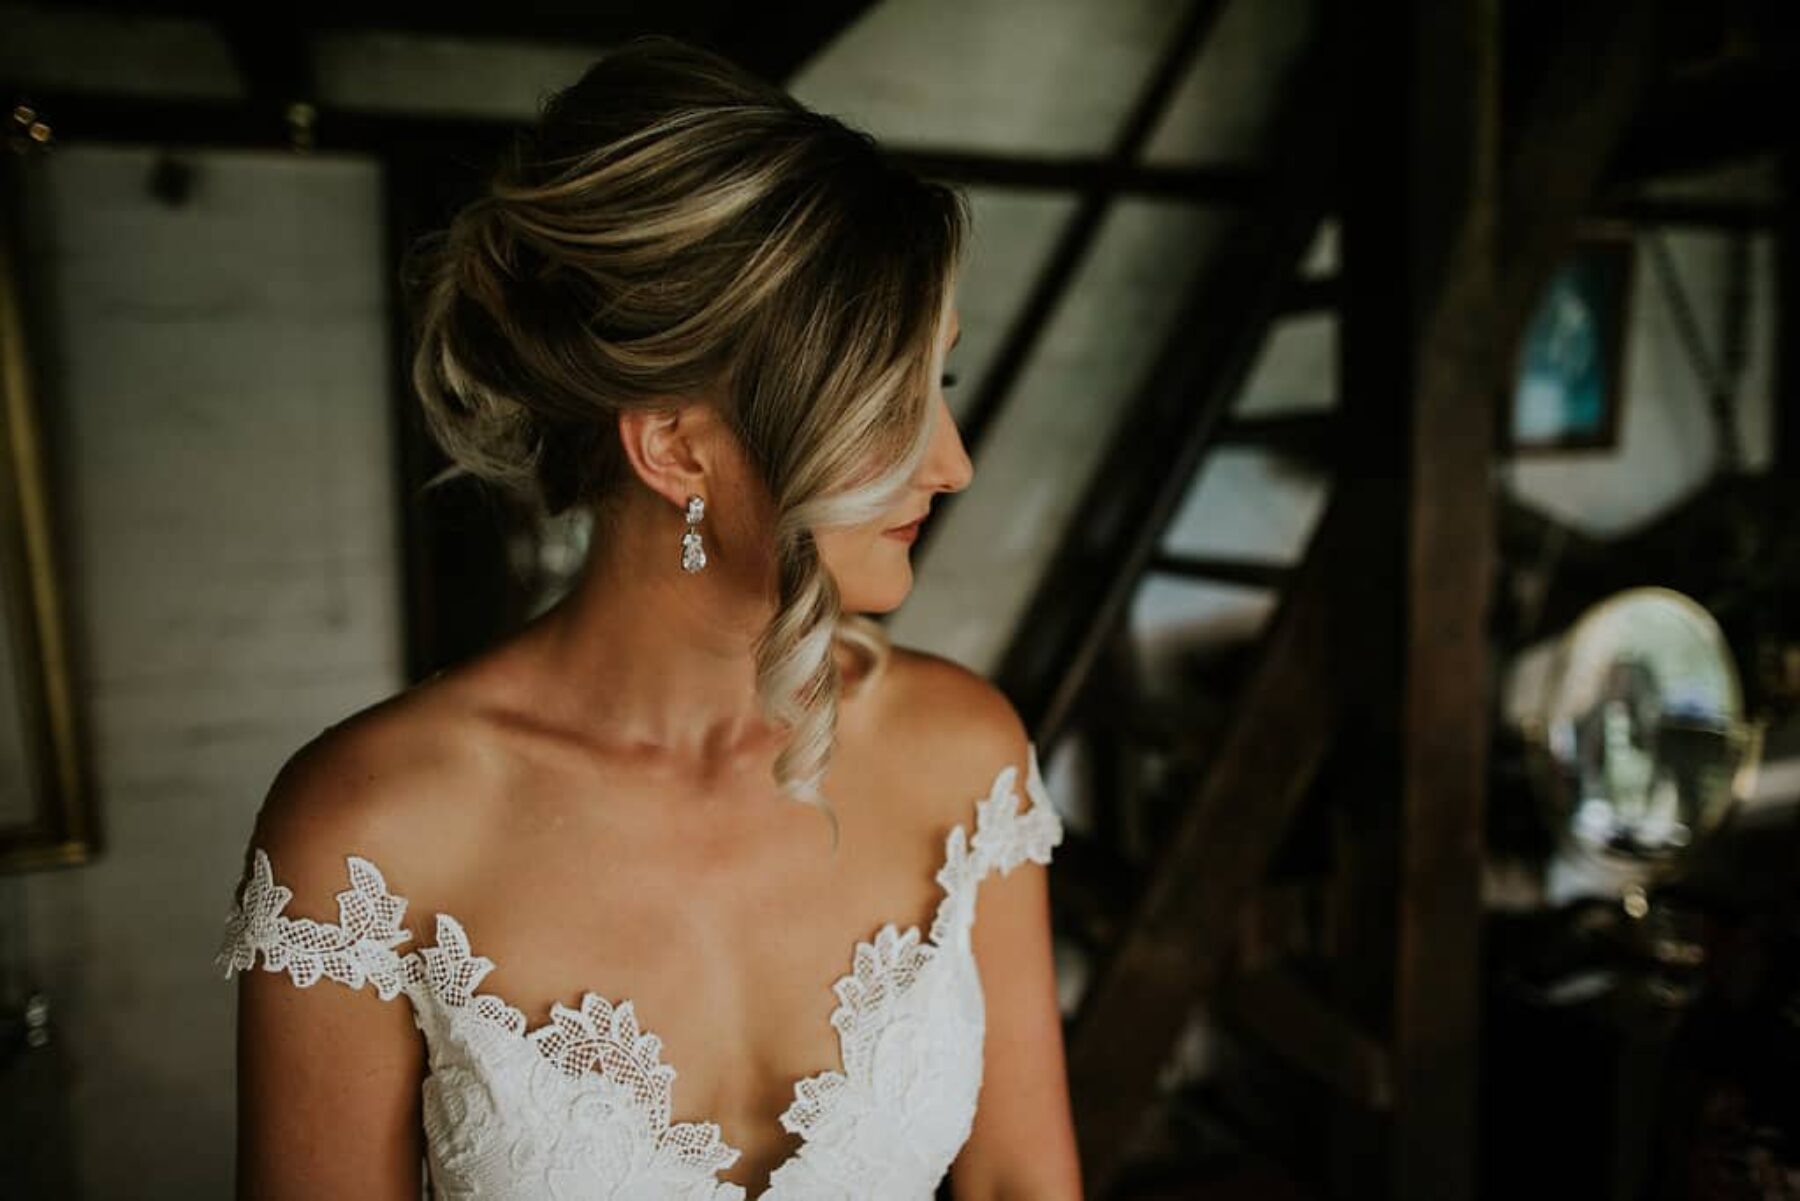 Lace off-shoulder wedding dress by Olvi's